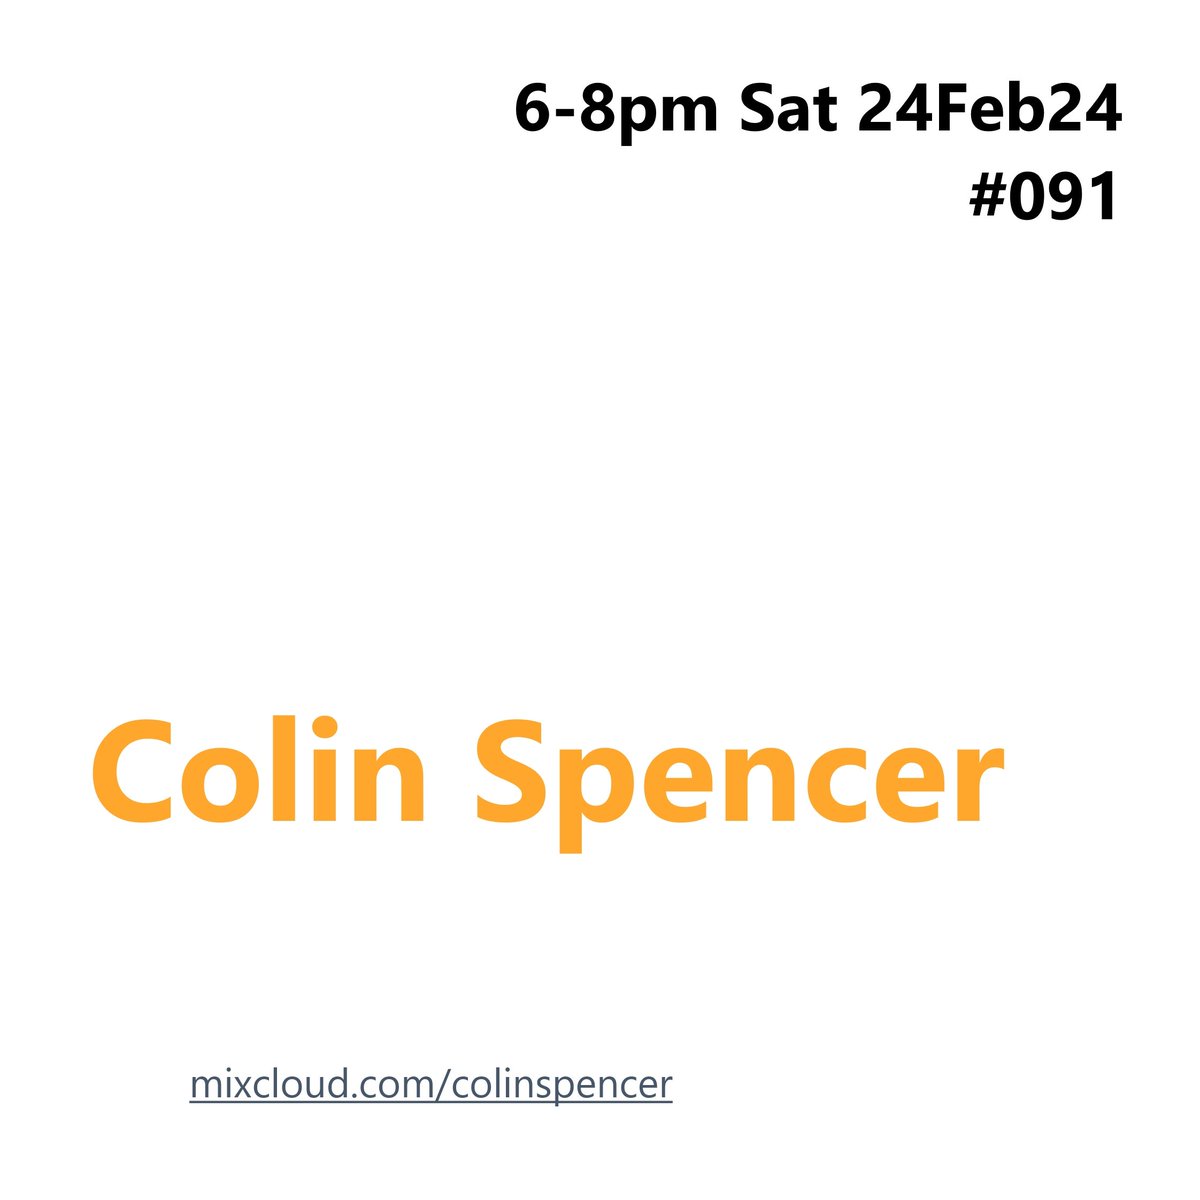 #INTERVIEW #SapphiraVee champions #Pretenders, accompanied by #ThreeOriginalsByEach, during #ColinSpencer Programme #091 🔊mixcloud.com/colinspencer/🎧 Saturday 24Feb24 6-8pm (#UK times) #DiscoverAndRemember @ThePretendersHQ @Sapphira_Music Catch-up #086▶️mixcloud.com/ColinSpencer/c…